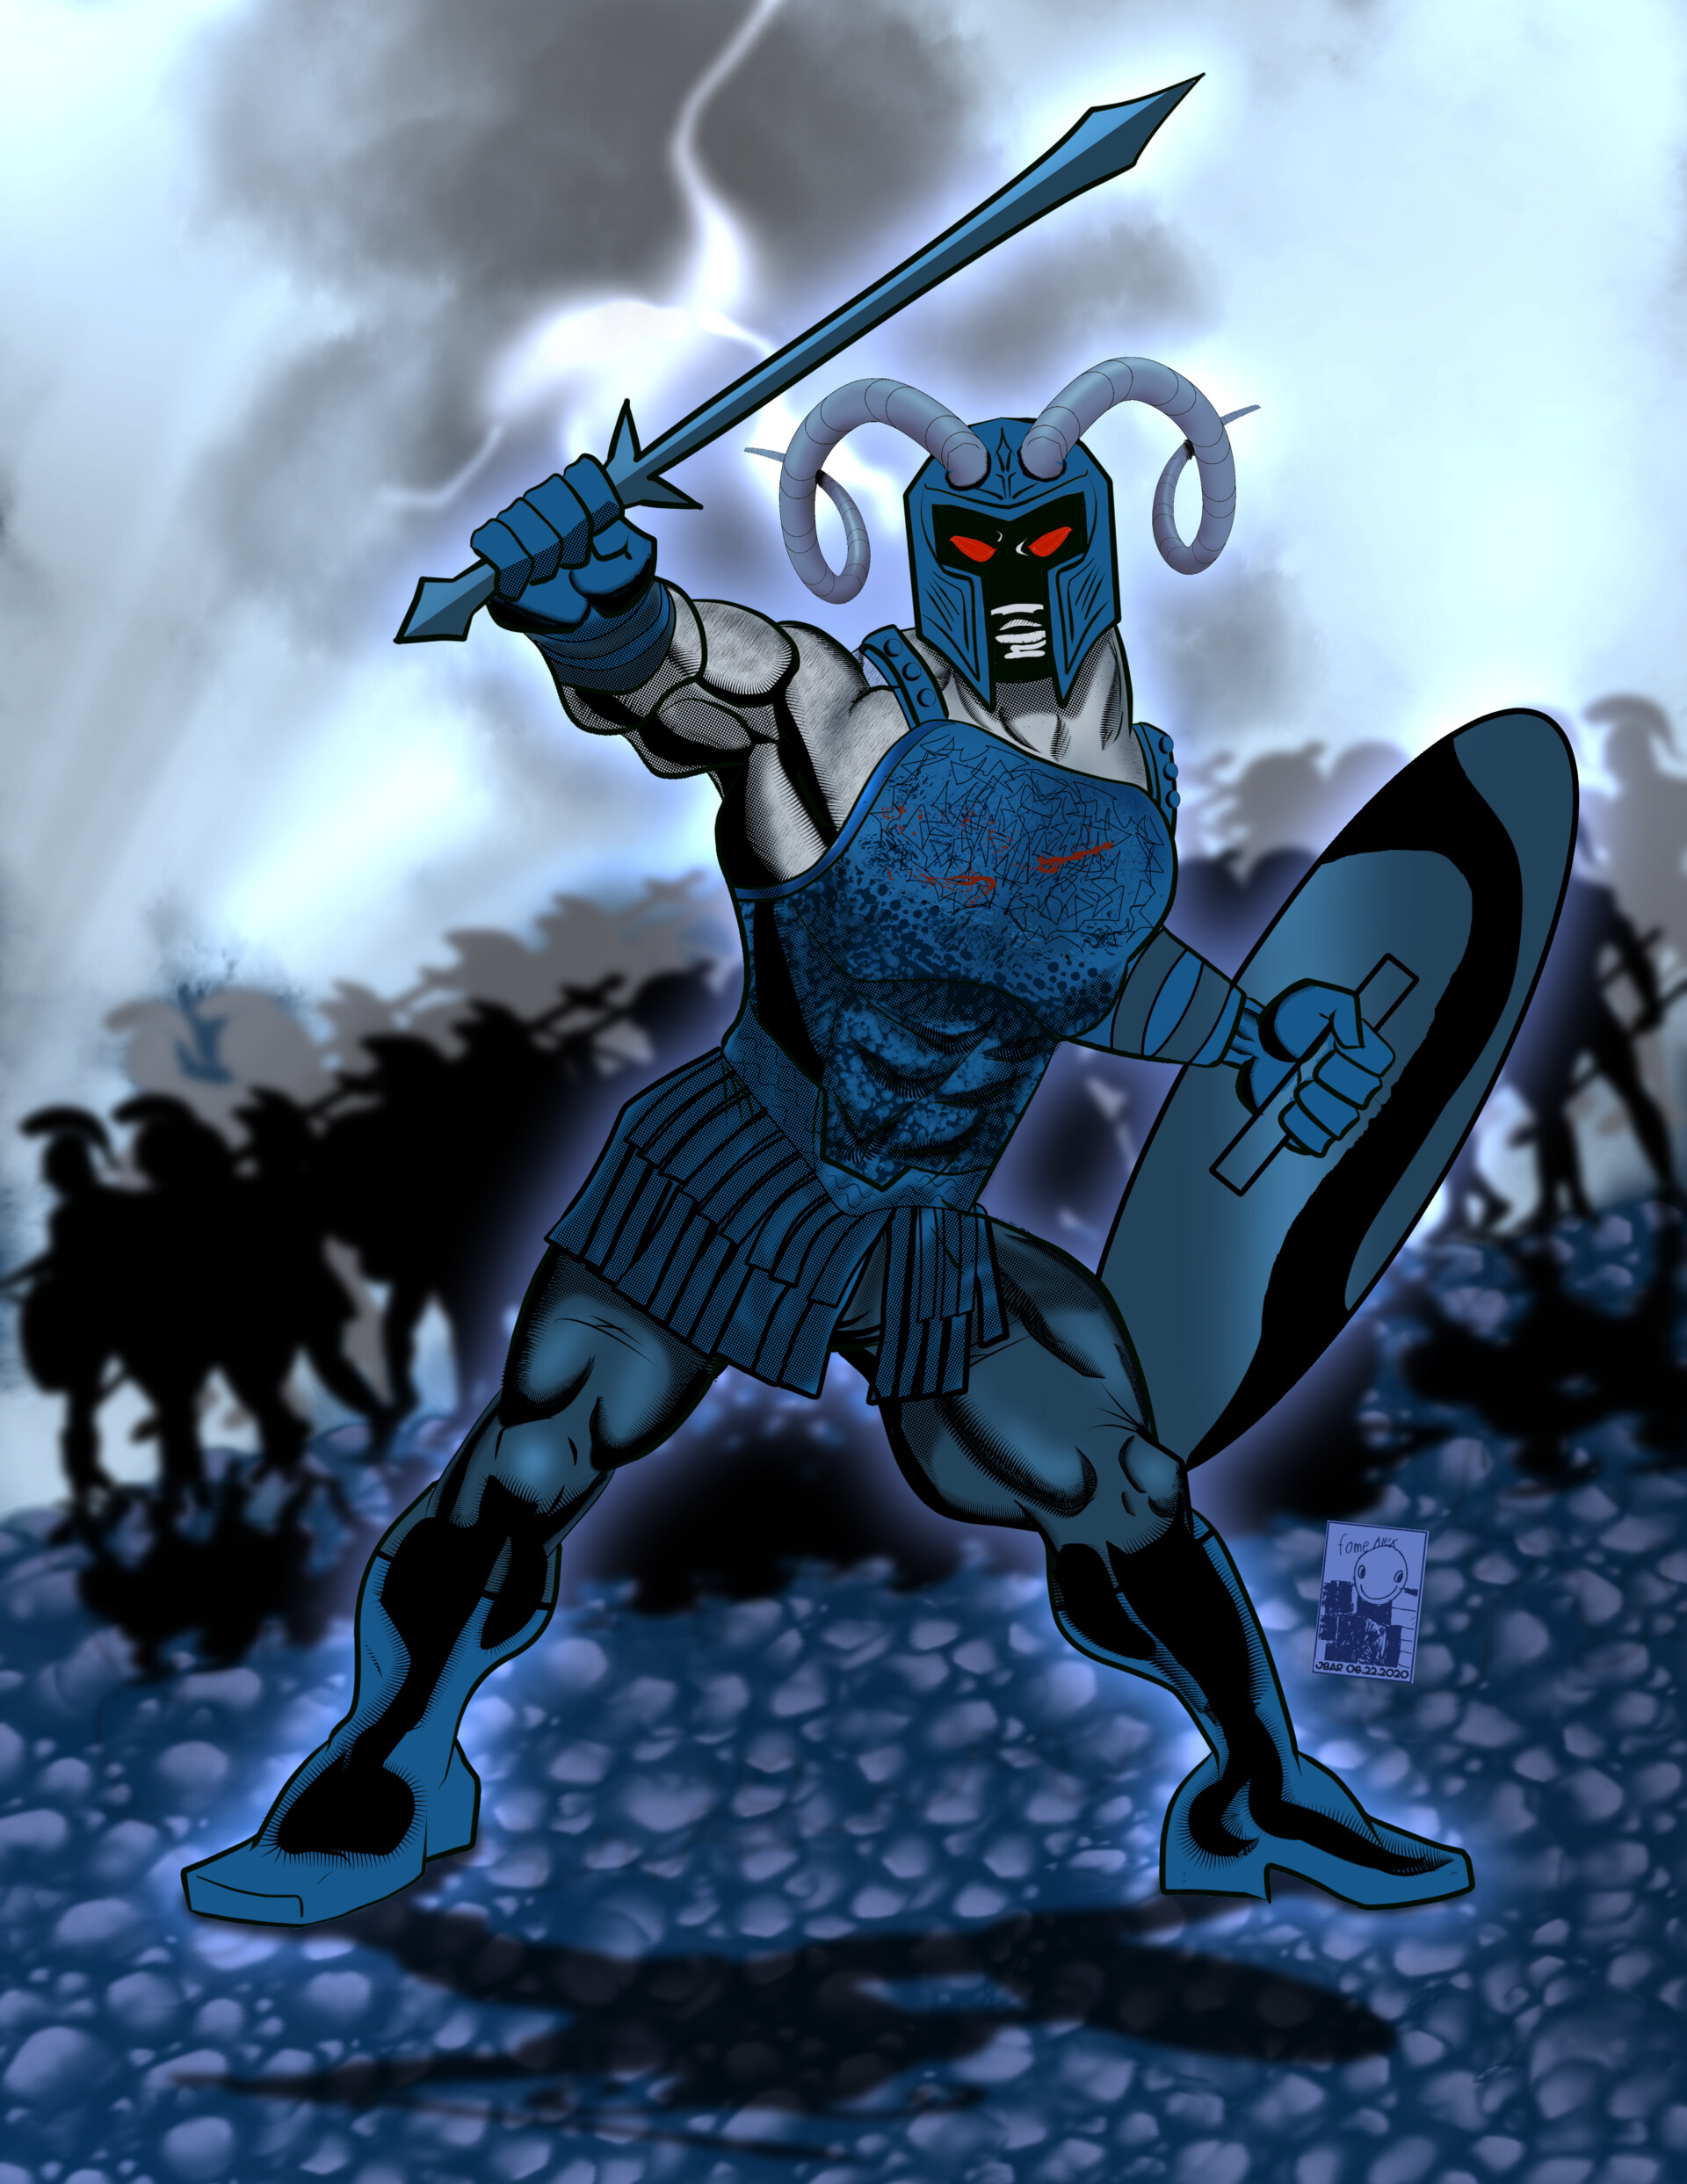 Ares God of War by ladamadelasestrellas on DeviantArt